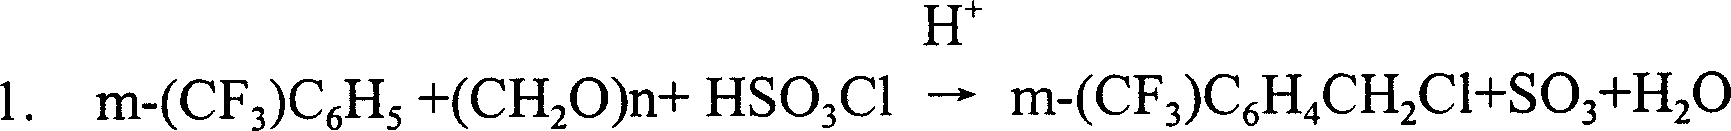 Method for synthesizing m-trifluoromethyl benzyl cyanide